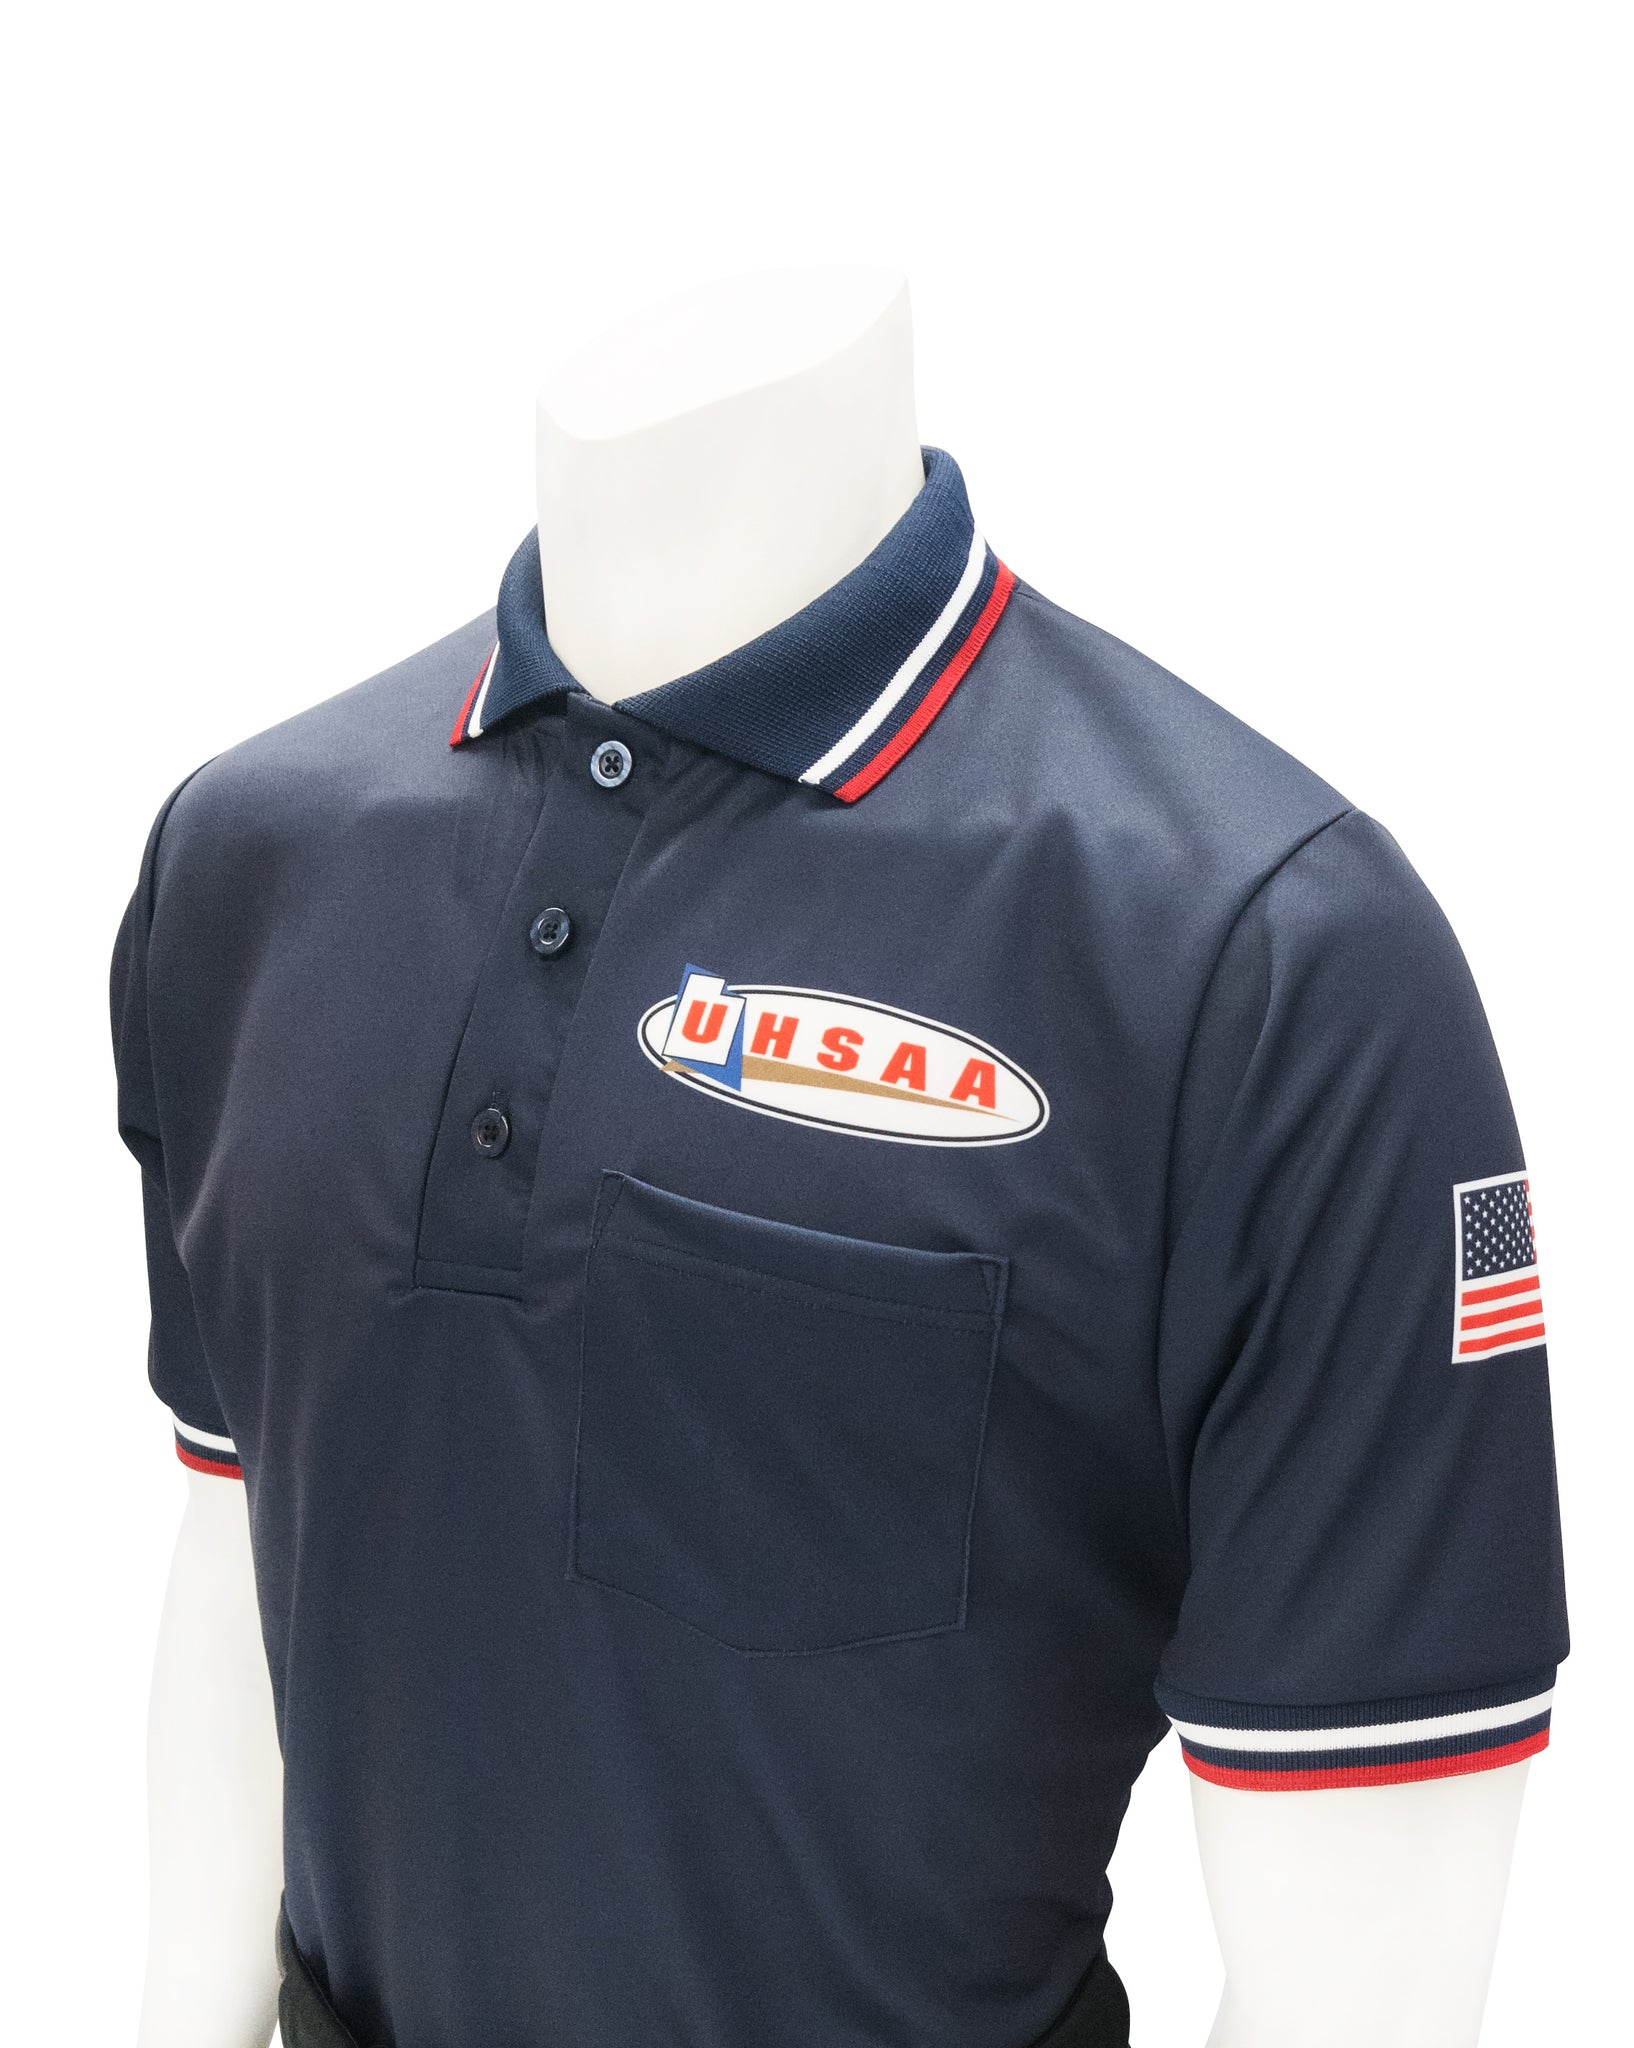 USA300UT - Smitty "Made in USA" - Ump Shirt Logo Above Pocket Navy